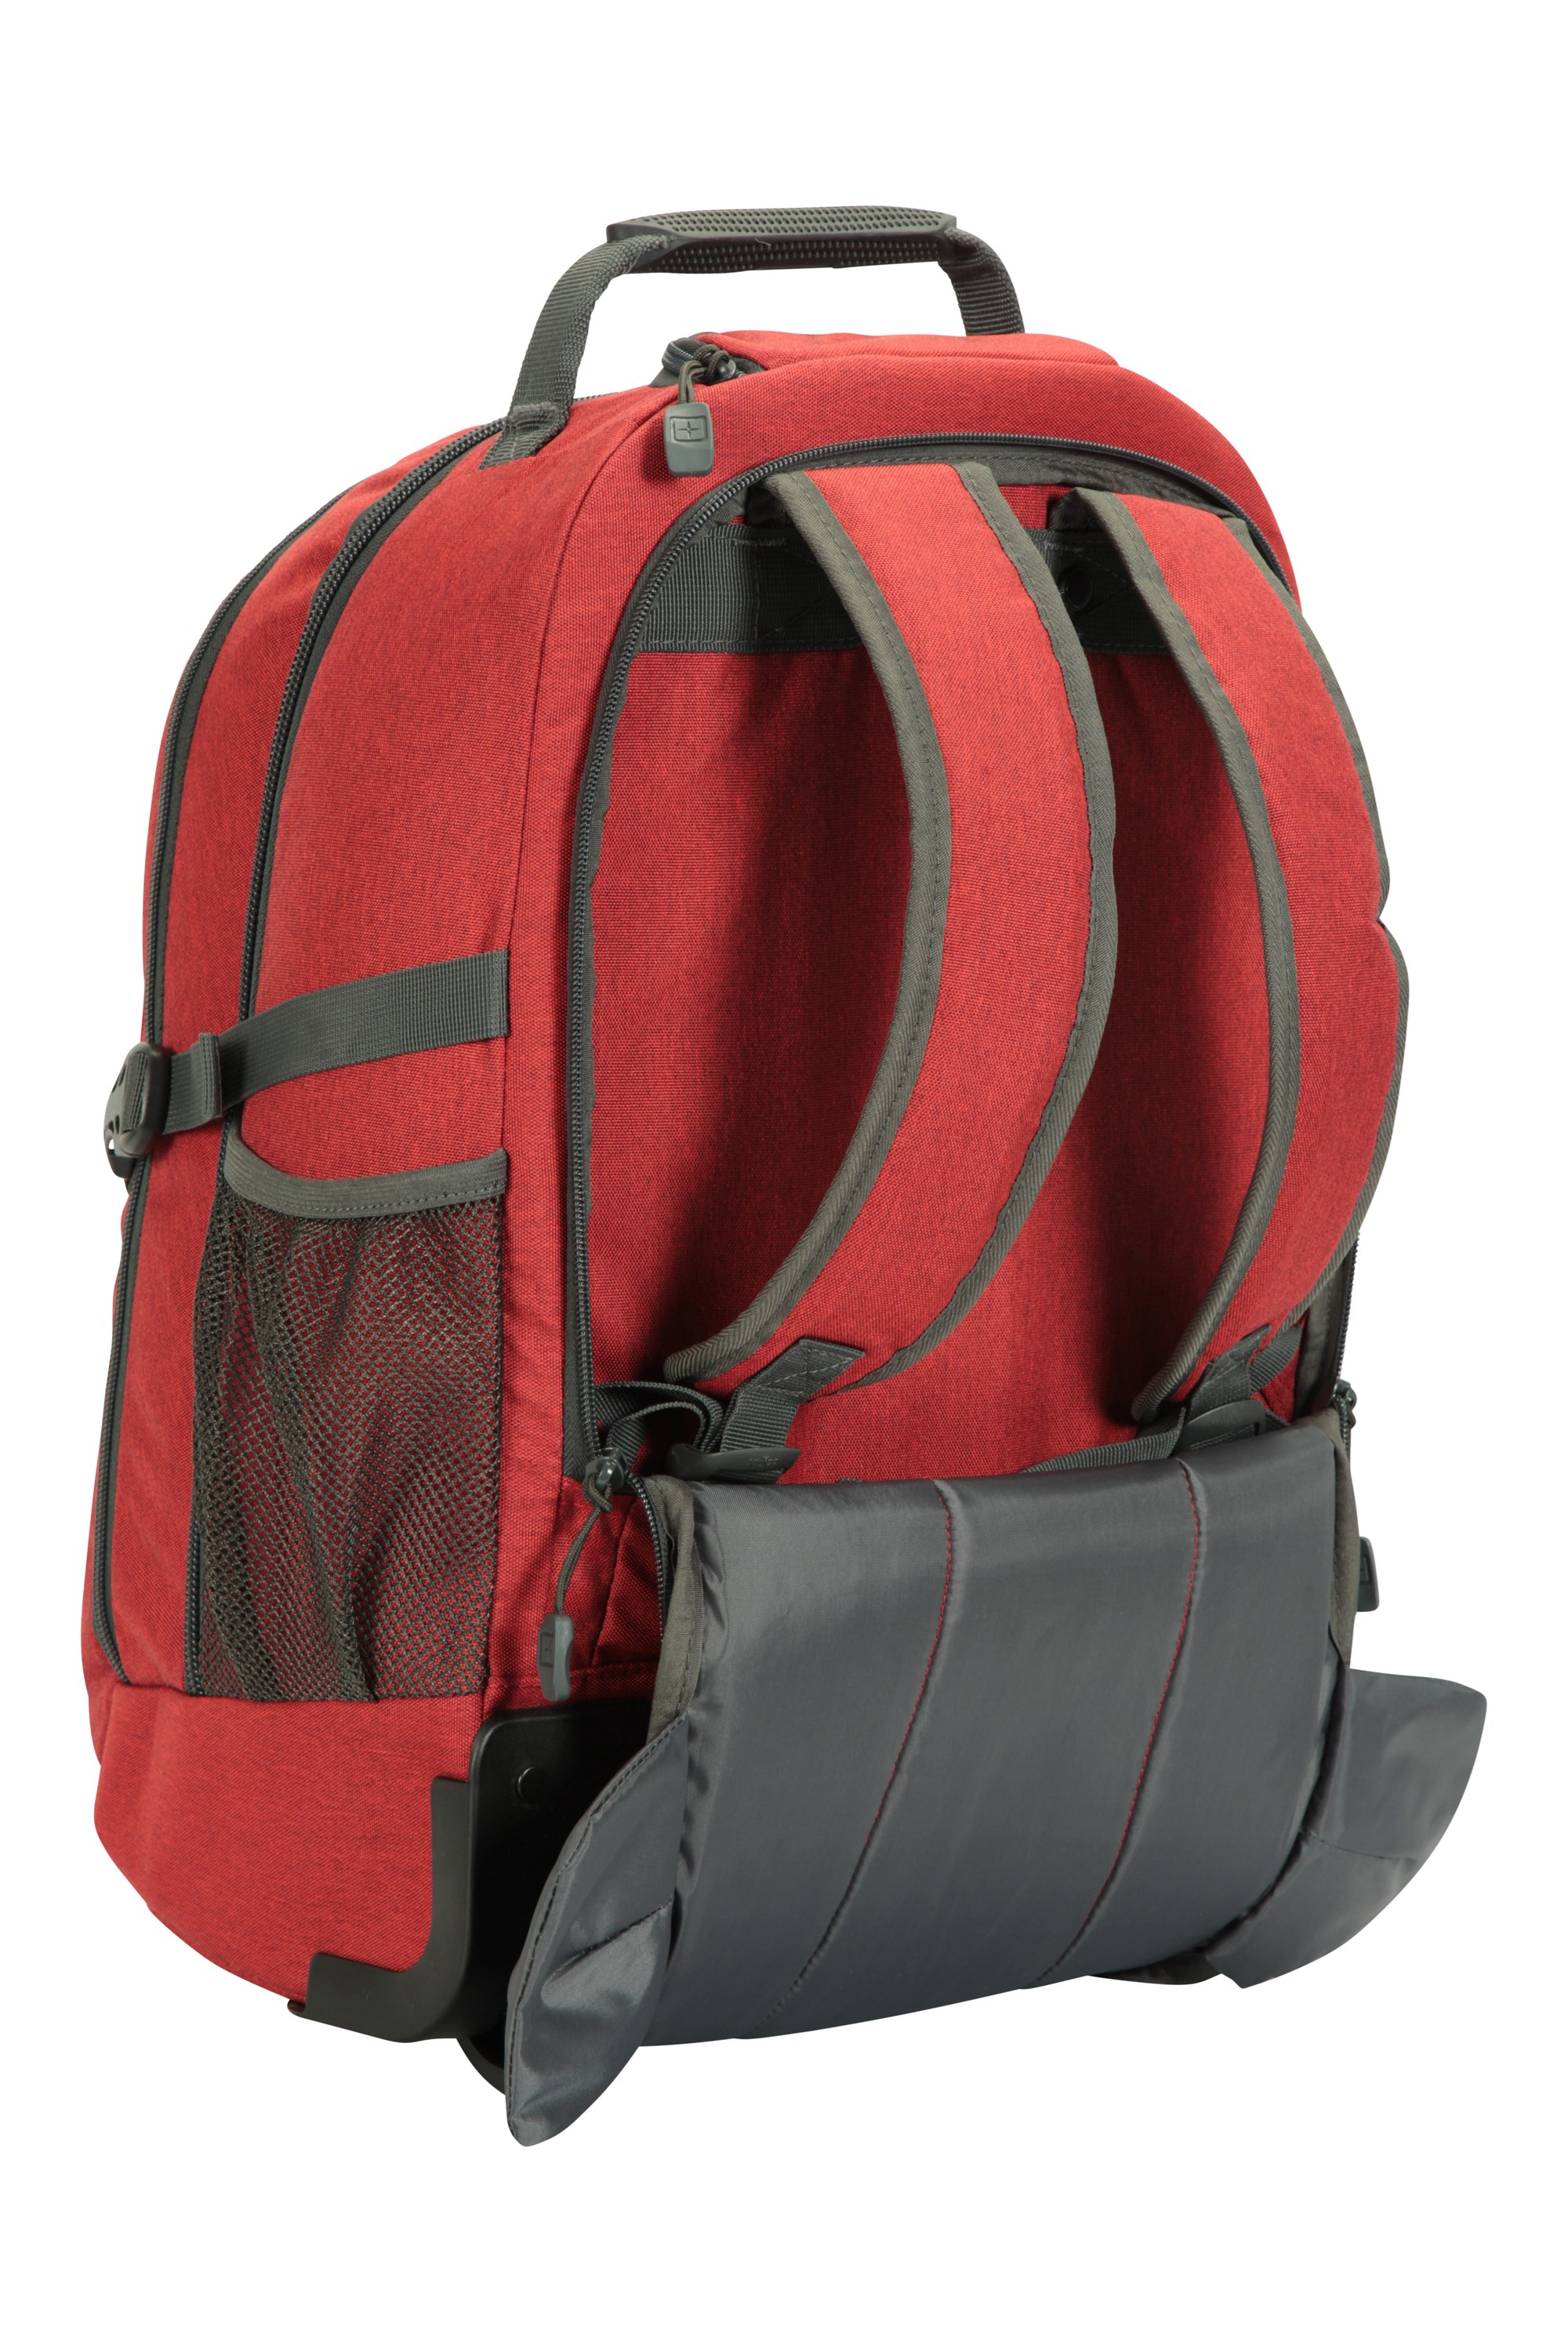 Mountain Warehouse Uni Voyager Rucksack Wheelie 35L Travel Bag